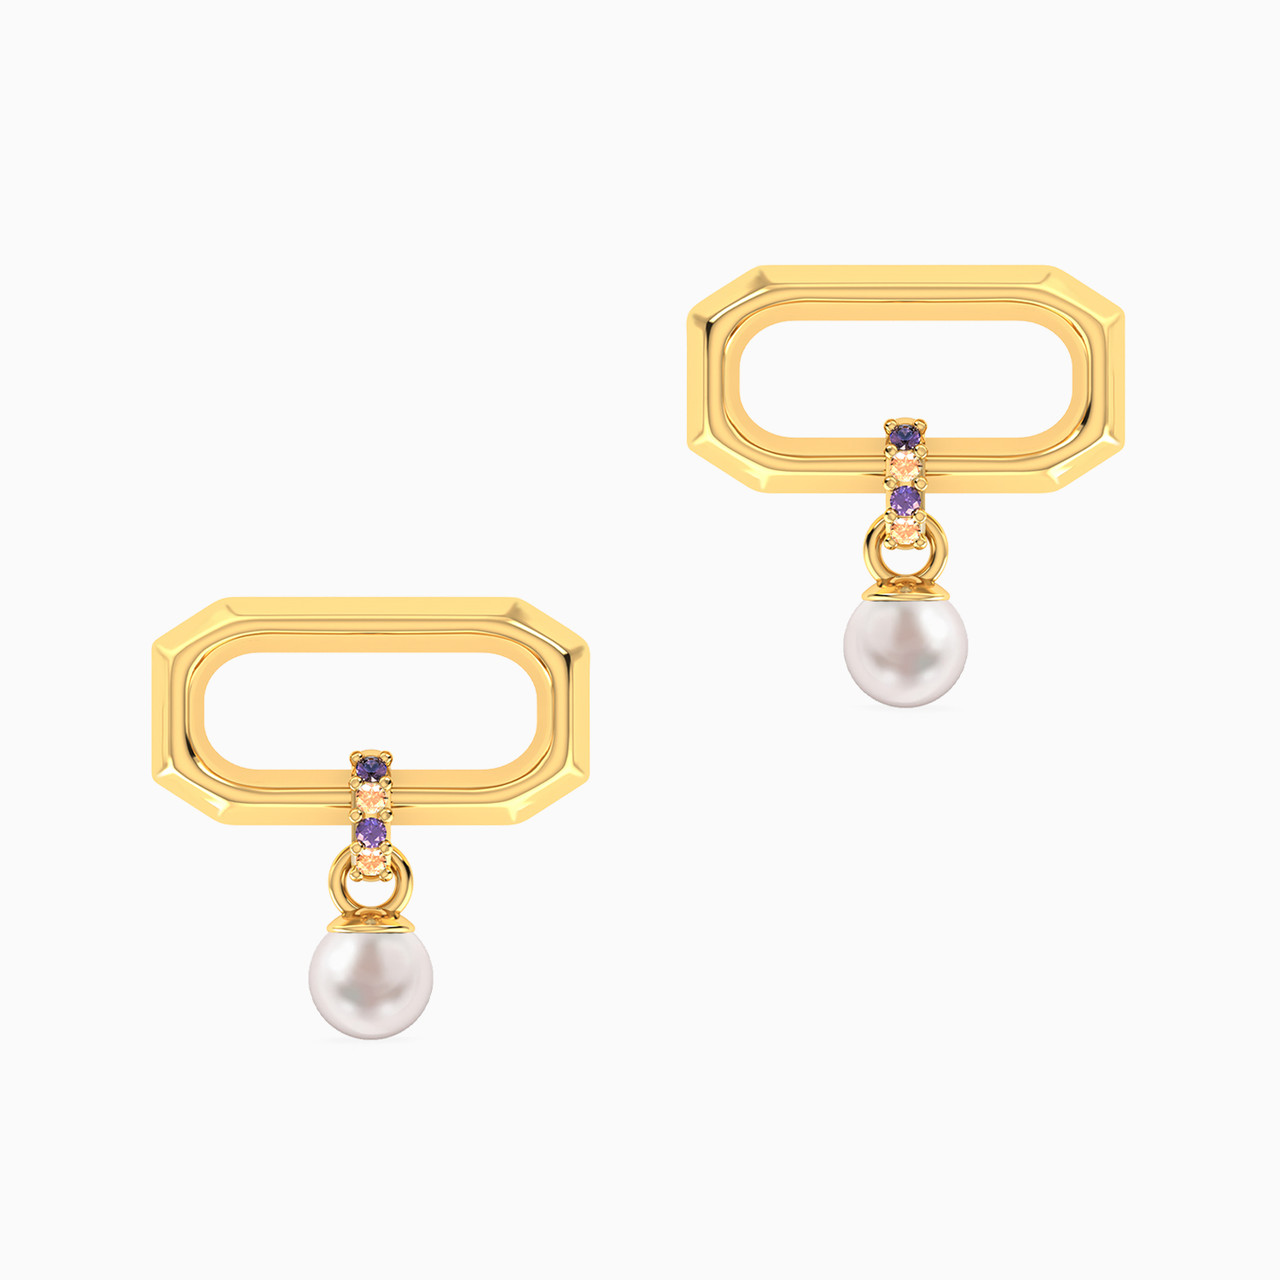 14K Gold Pearl & Colored Stones Drop Earrings